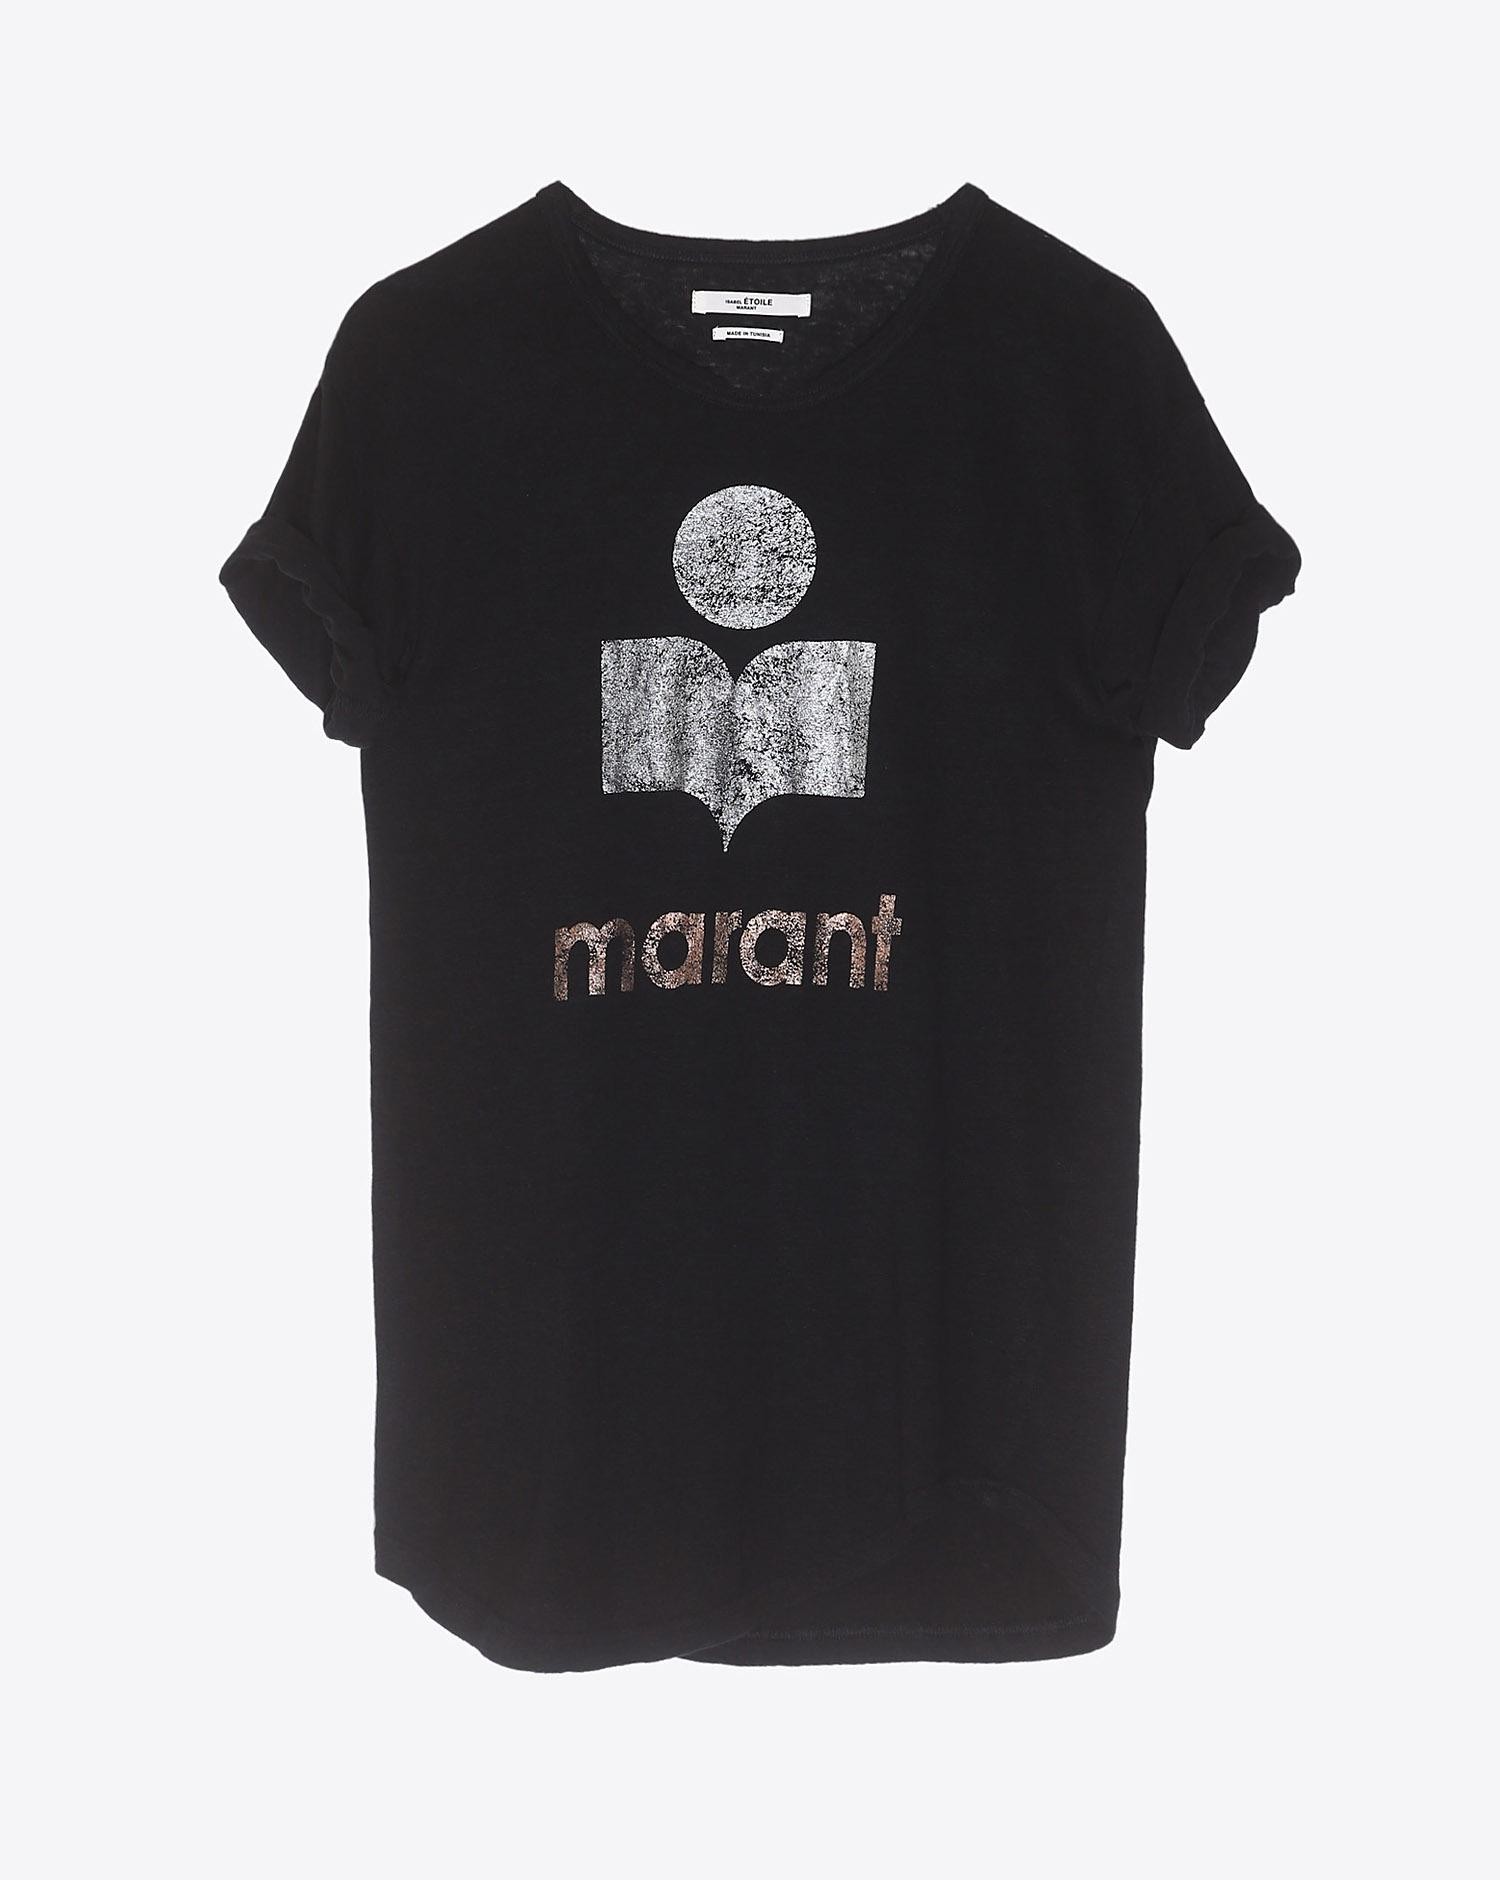 Tee-shirt en lin noir logo argent et mordoré Koldi Isabel Marant Etoile.